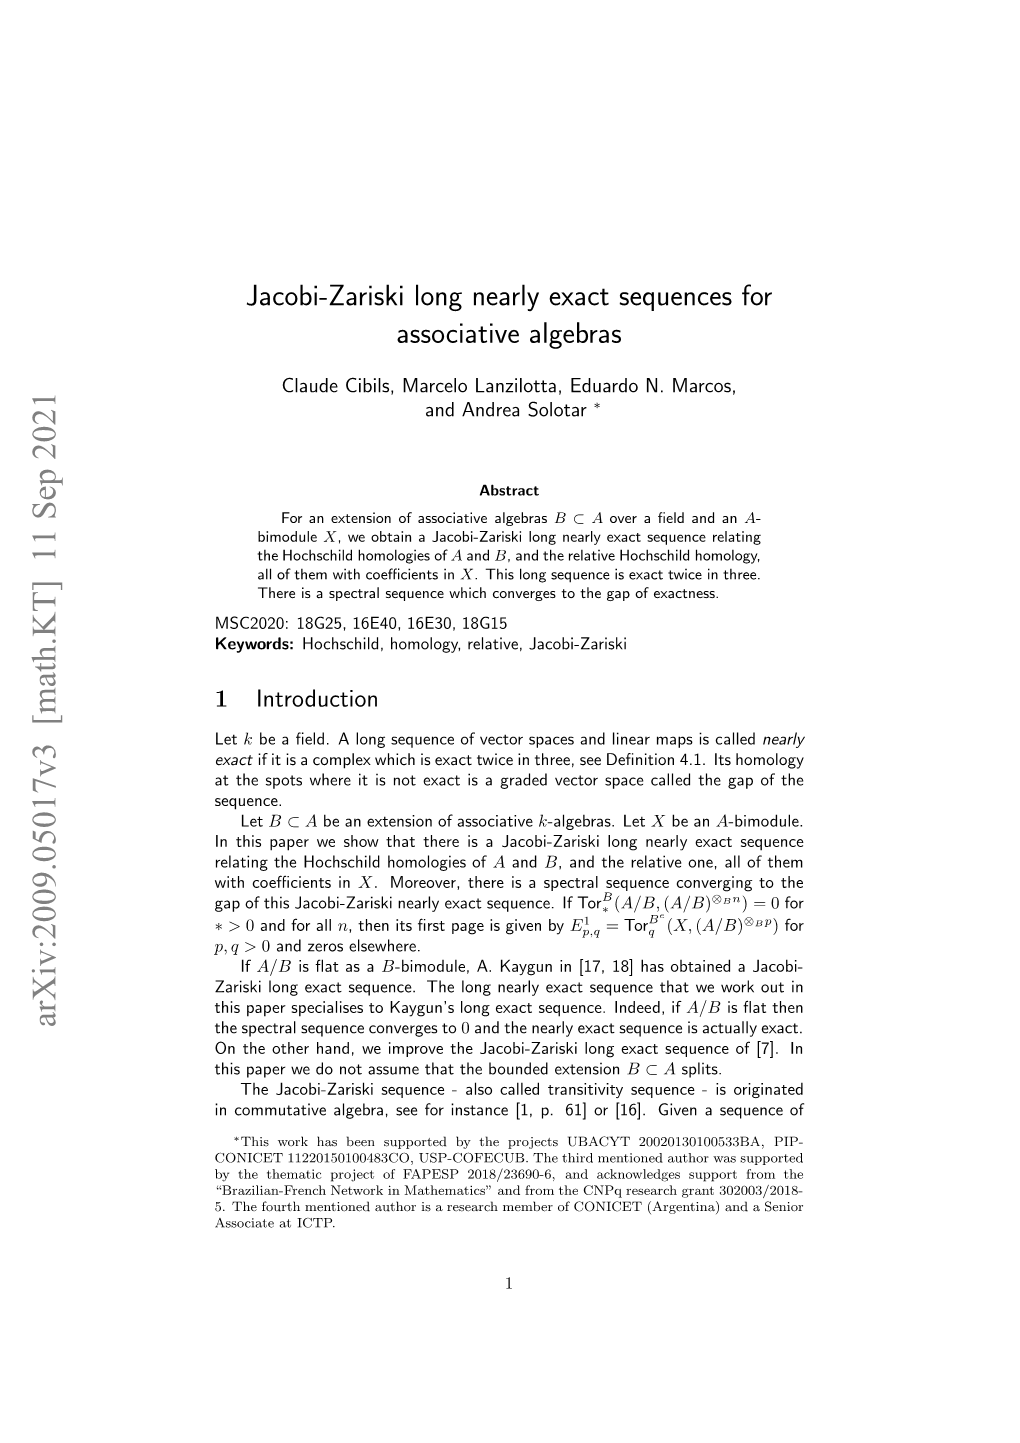 Jacobi-Zariski Long Nearly Exact Sequences for Associative Algebras